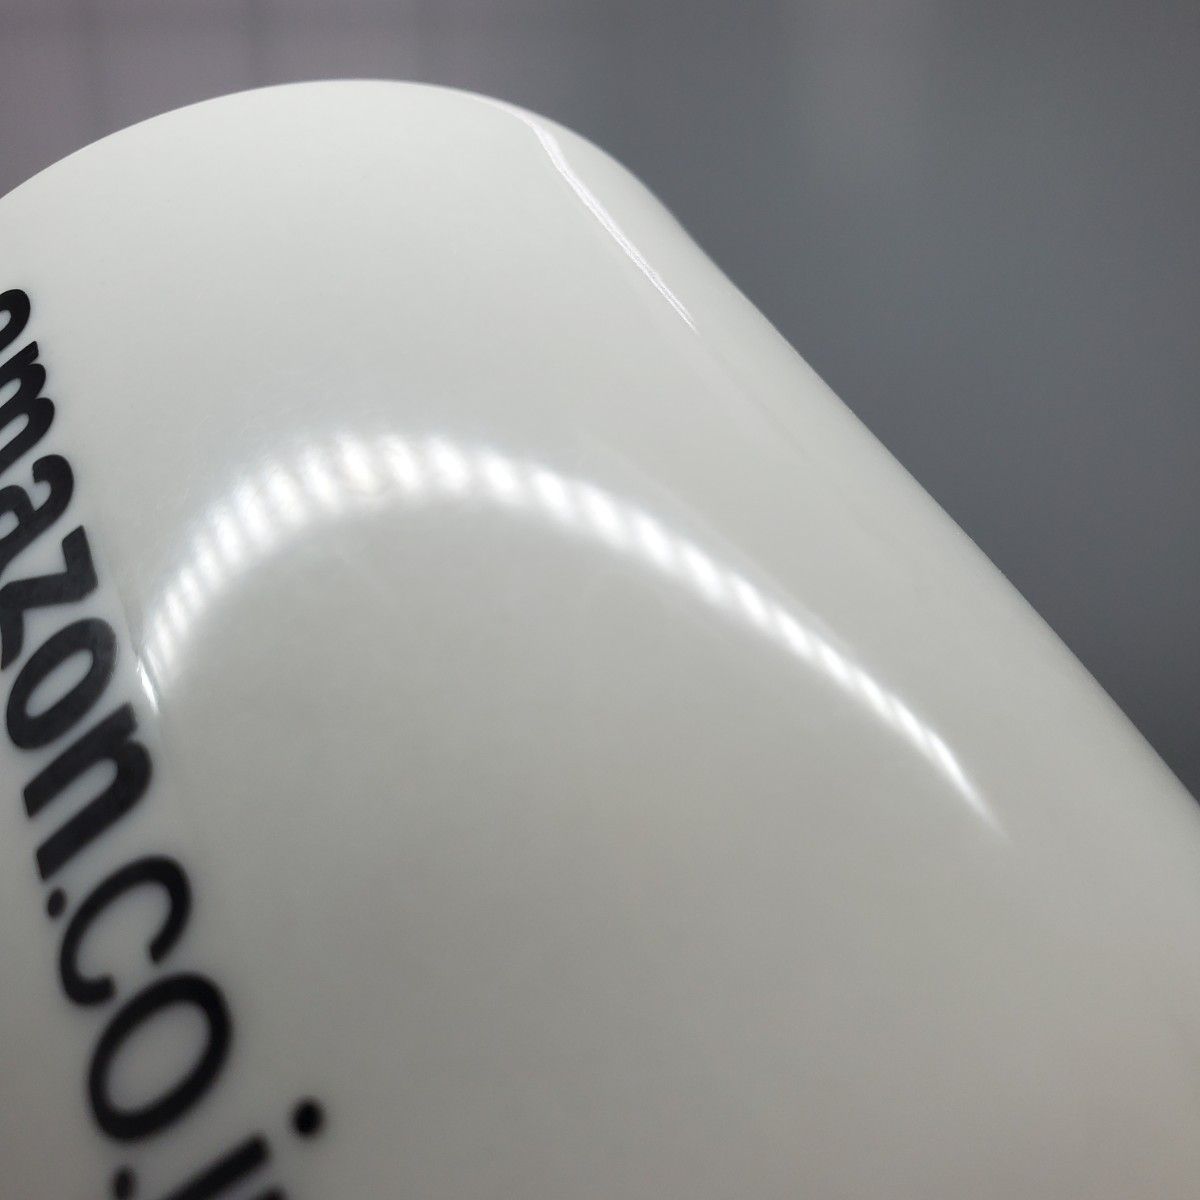 Amazon オリジナル マグカップ 白黒セット